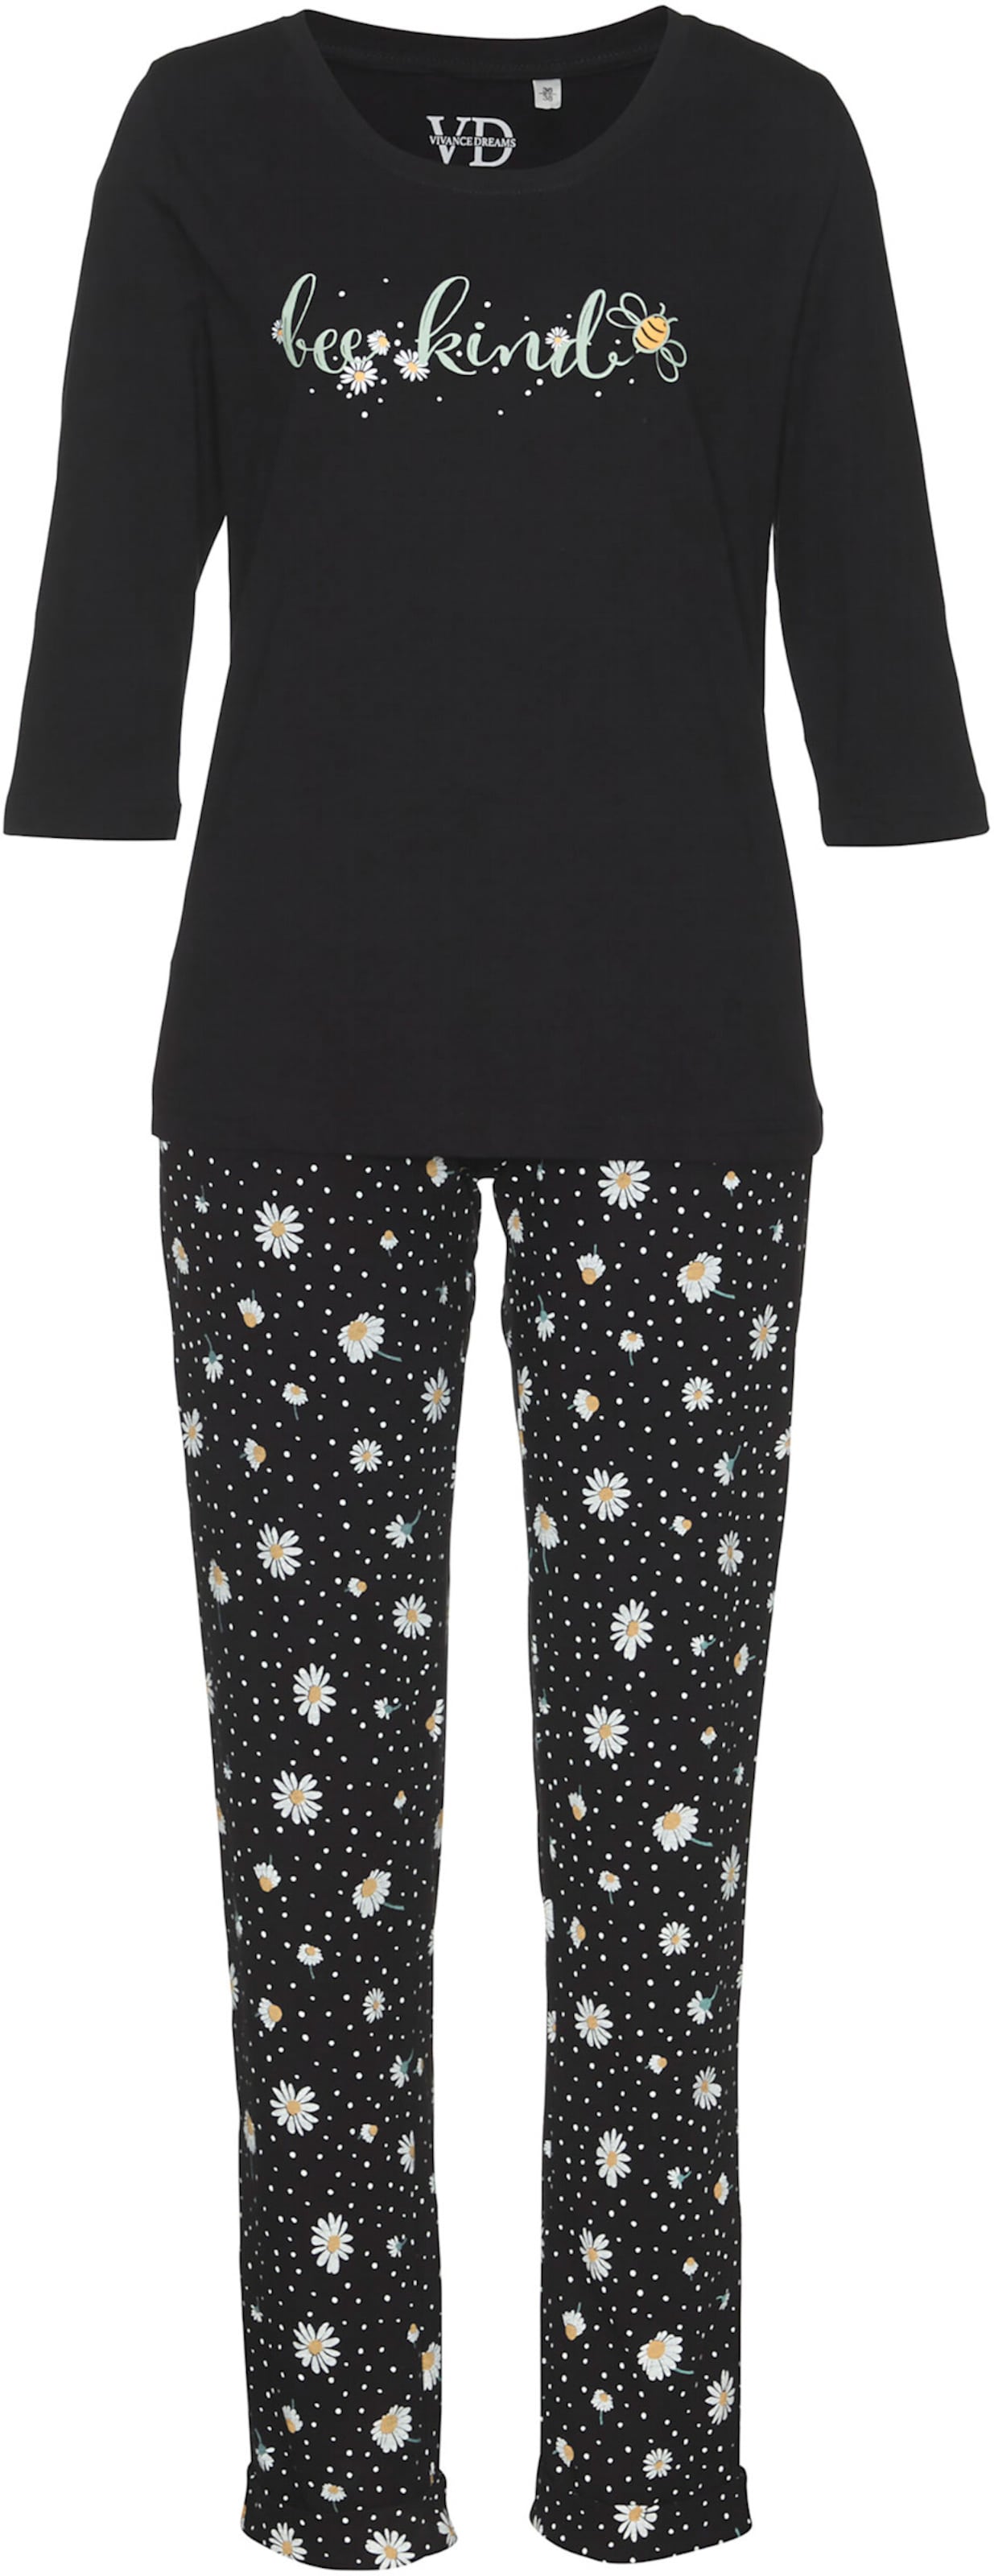 Pyjama in schwarz-gemustert von Vivance Dreams